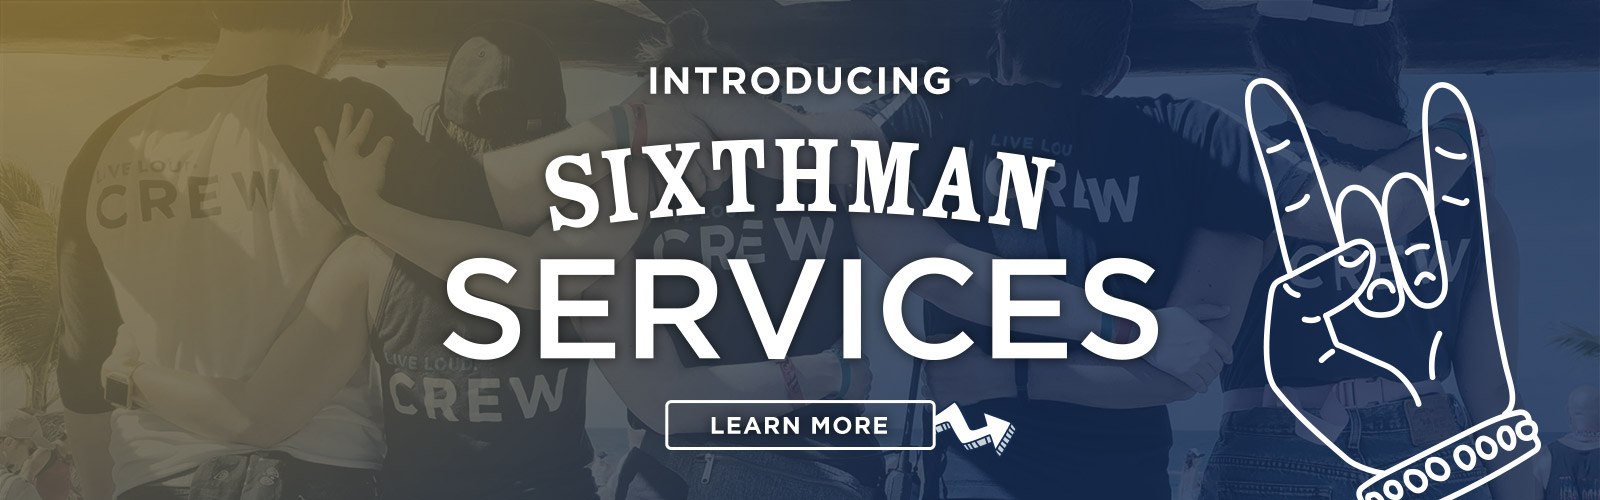 Sixthman Services